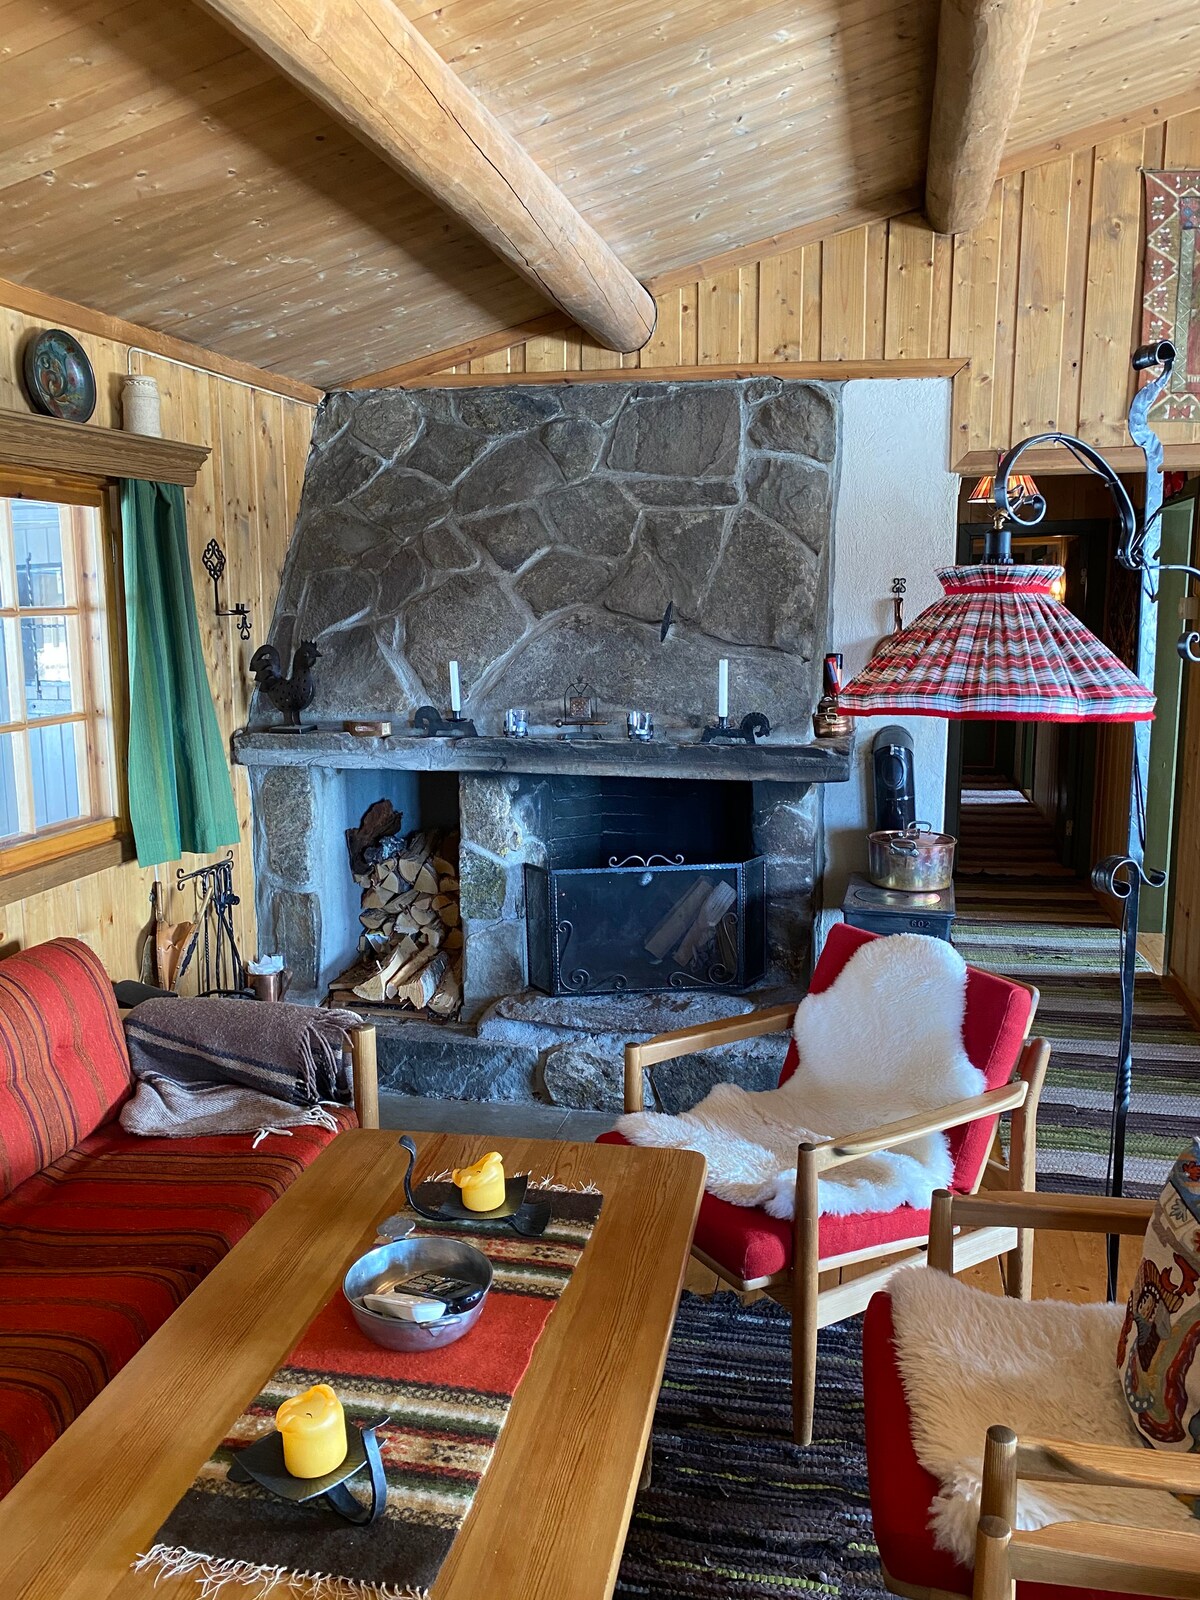 Hardangervidda景观非常好的小木屋